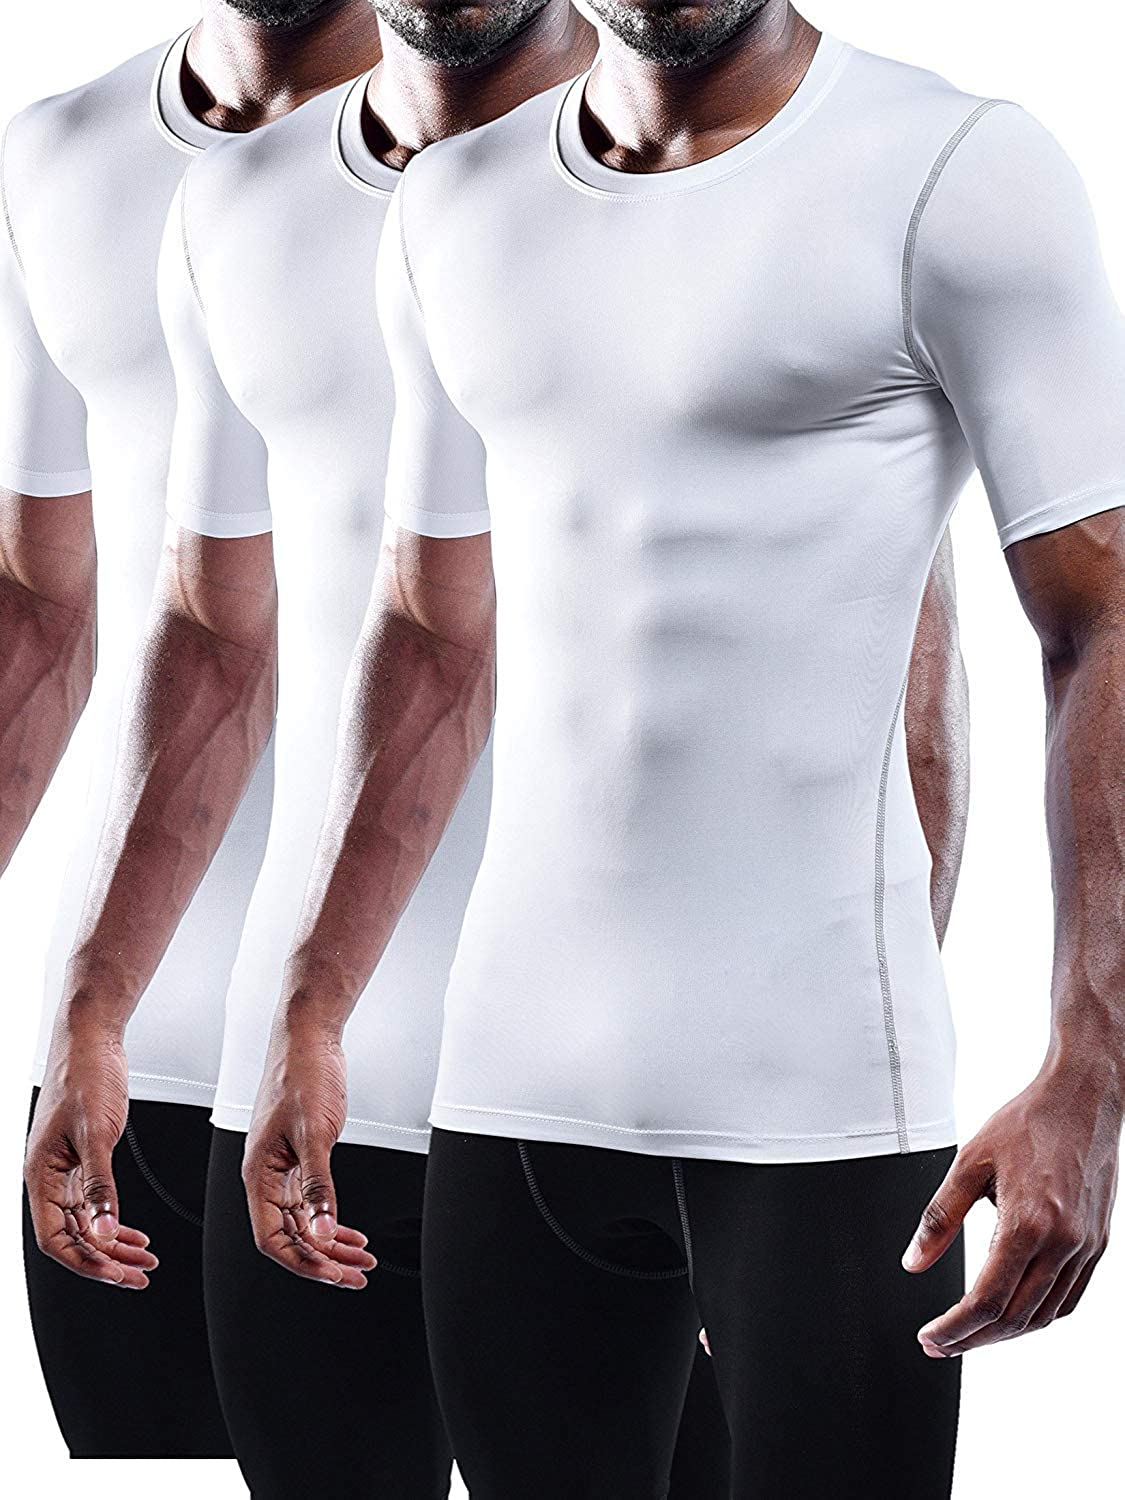 NELEUS Men's 3 Pack Athletic Compression Base Layer Workout Shirt